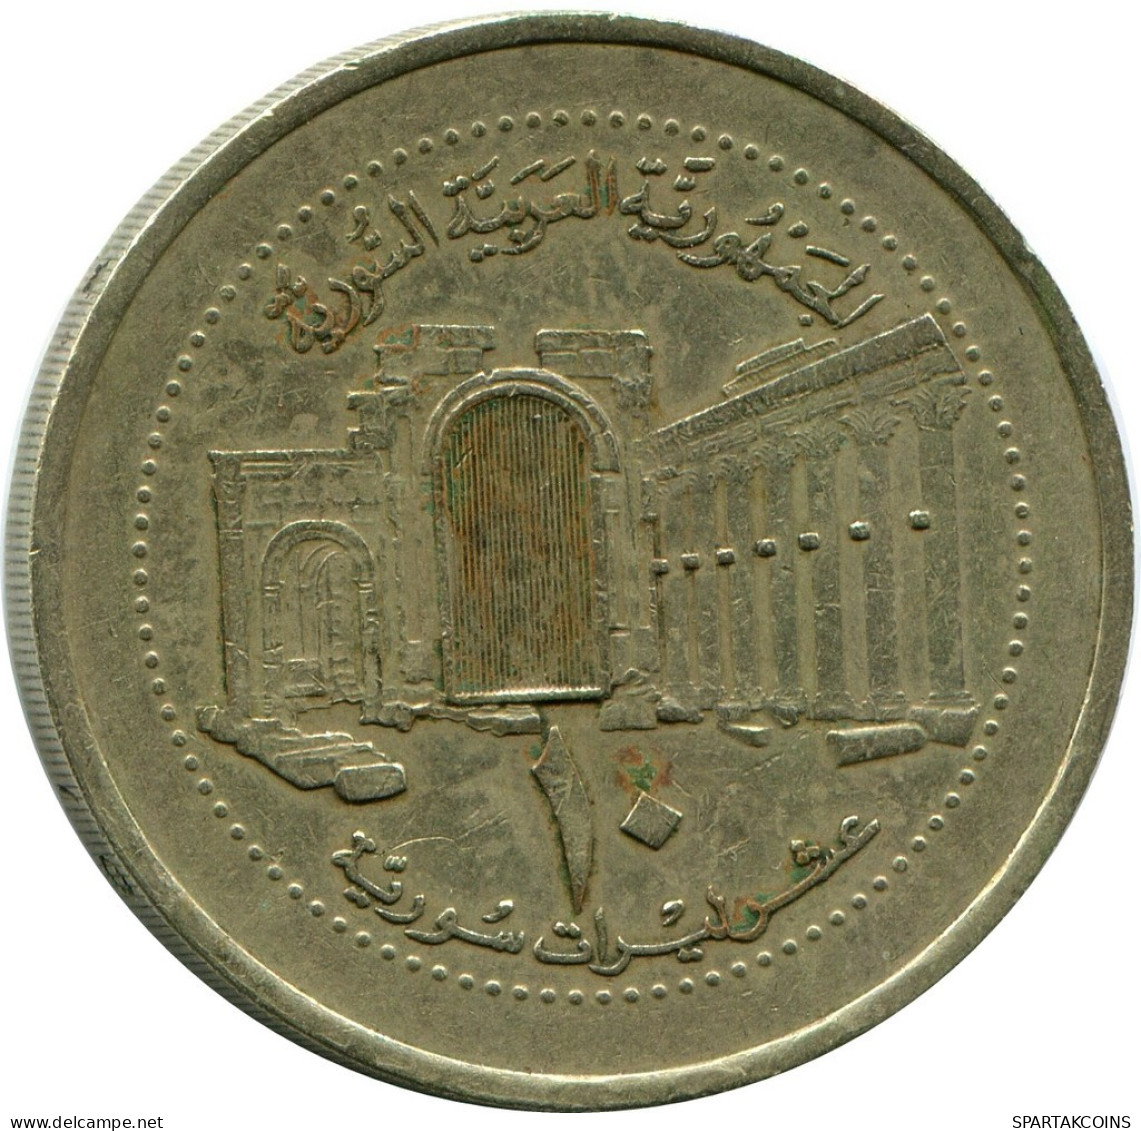 10 LIRAS / POUNDS 2003 SYRIEN SYRIA Islamisch Münze #AP566.D.D.A - Syria